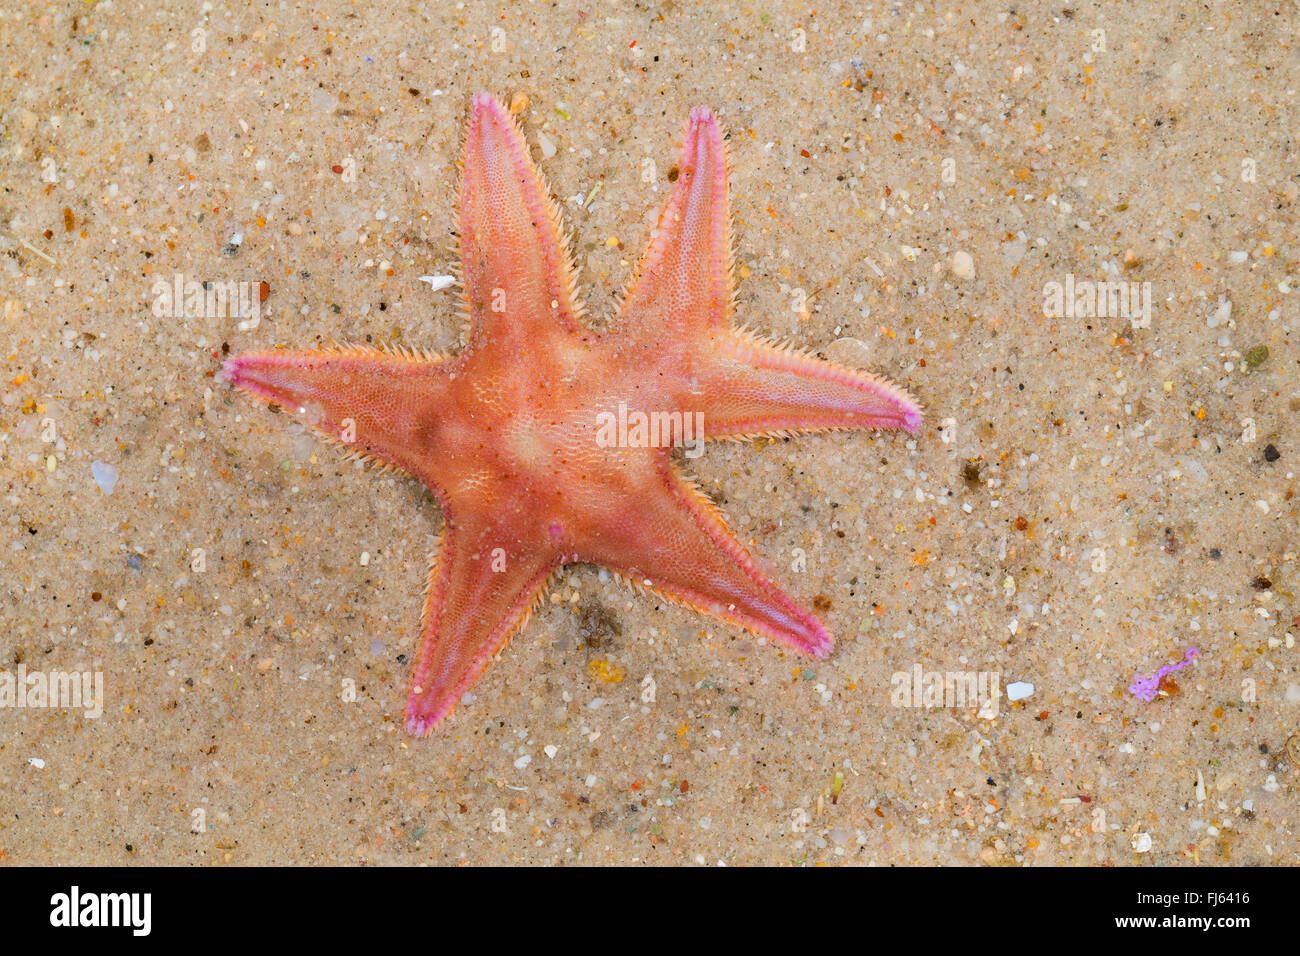 sand star (Astropecten irregularis, Astropecten muelleri), with a forked arm, regeneration Stock Photo